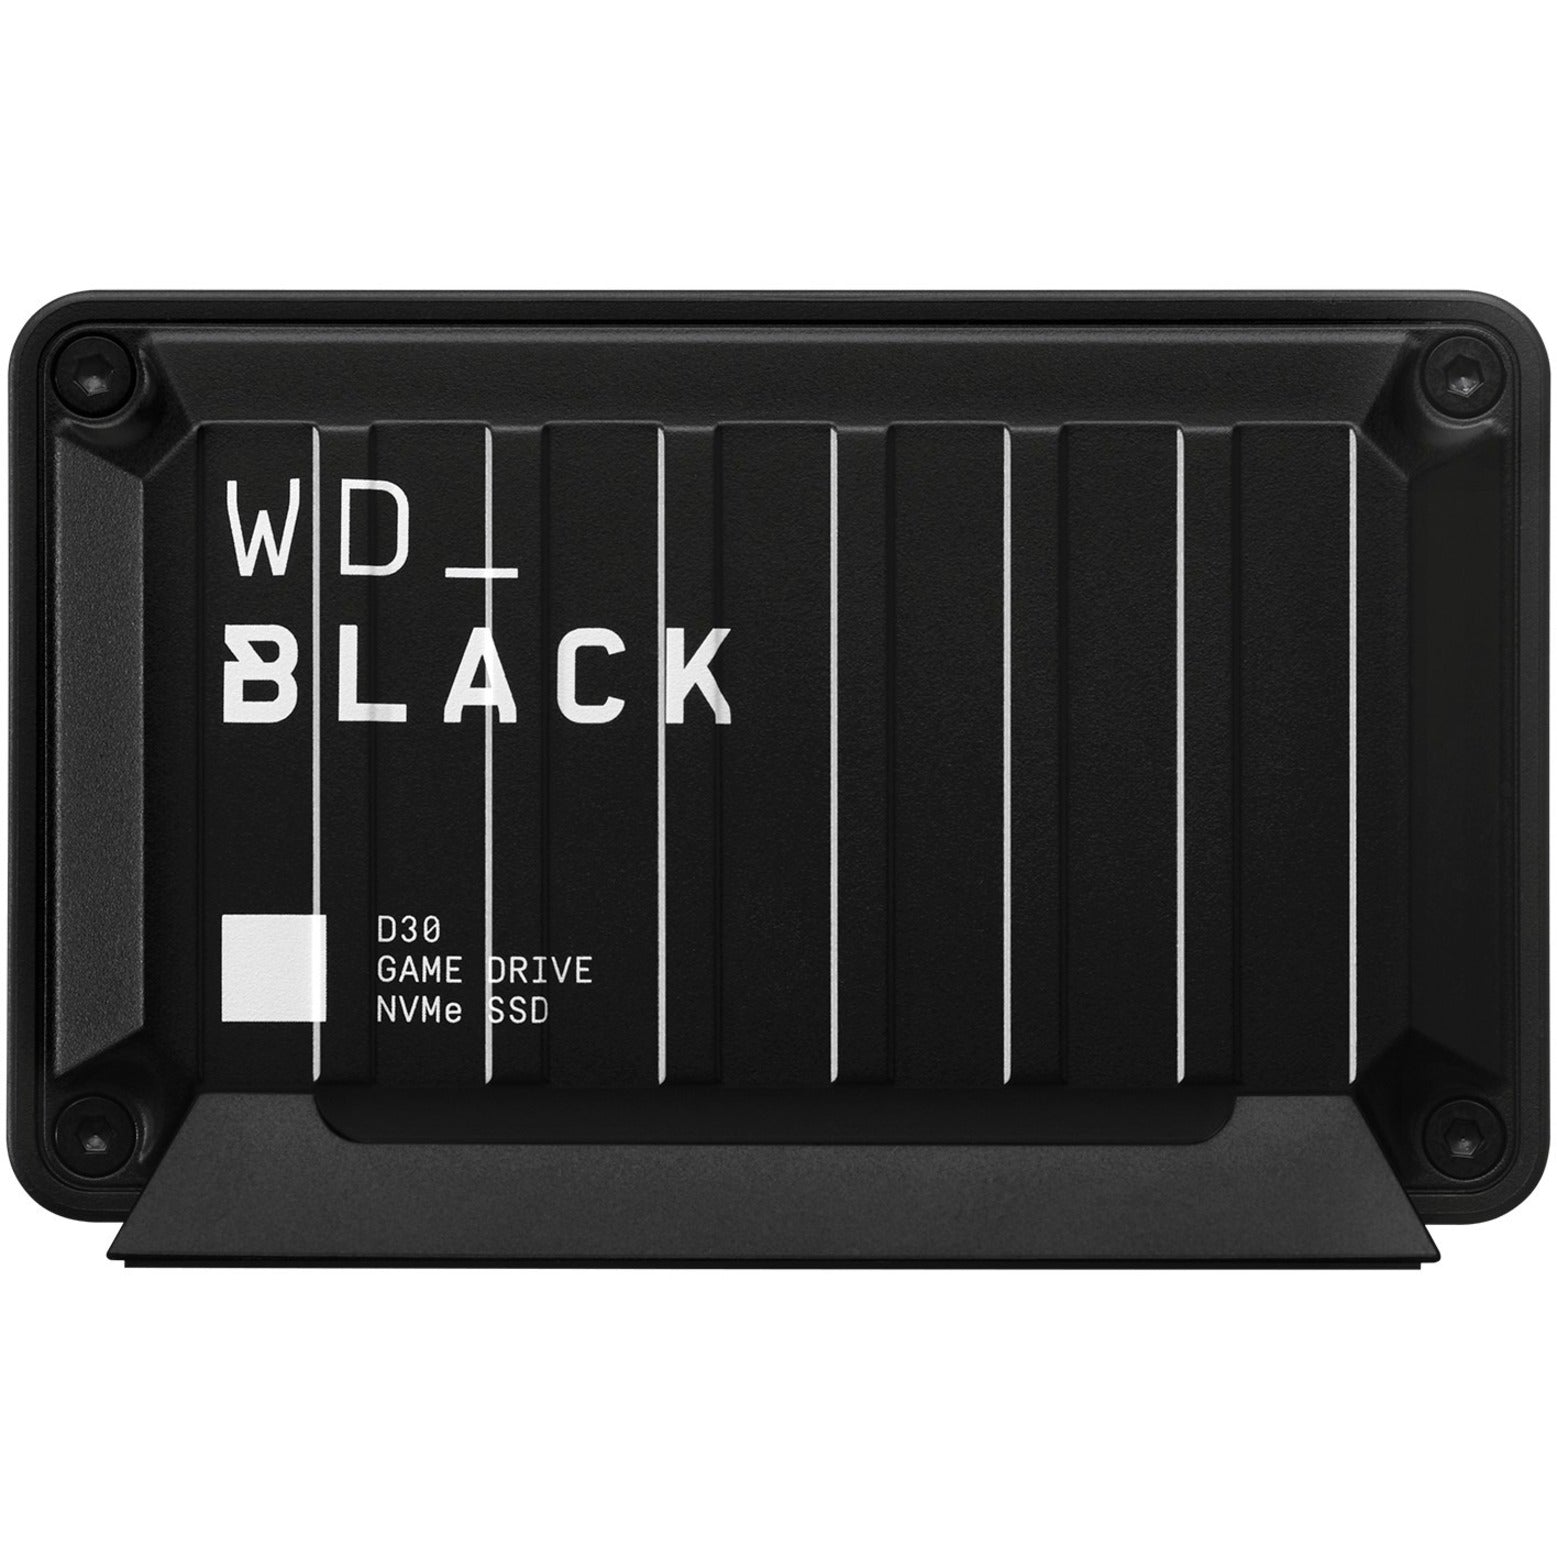 WD WDBATL0010BBK-WESN Black D30 Game Drive SSD, 1TB Portable External Solid State Drive - Maximum Read Transfer Rate 900 MB/s